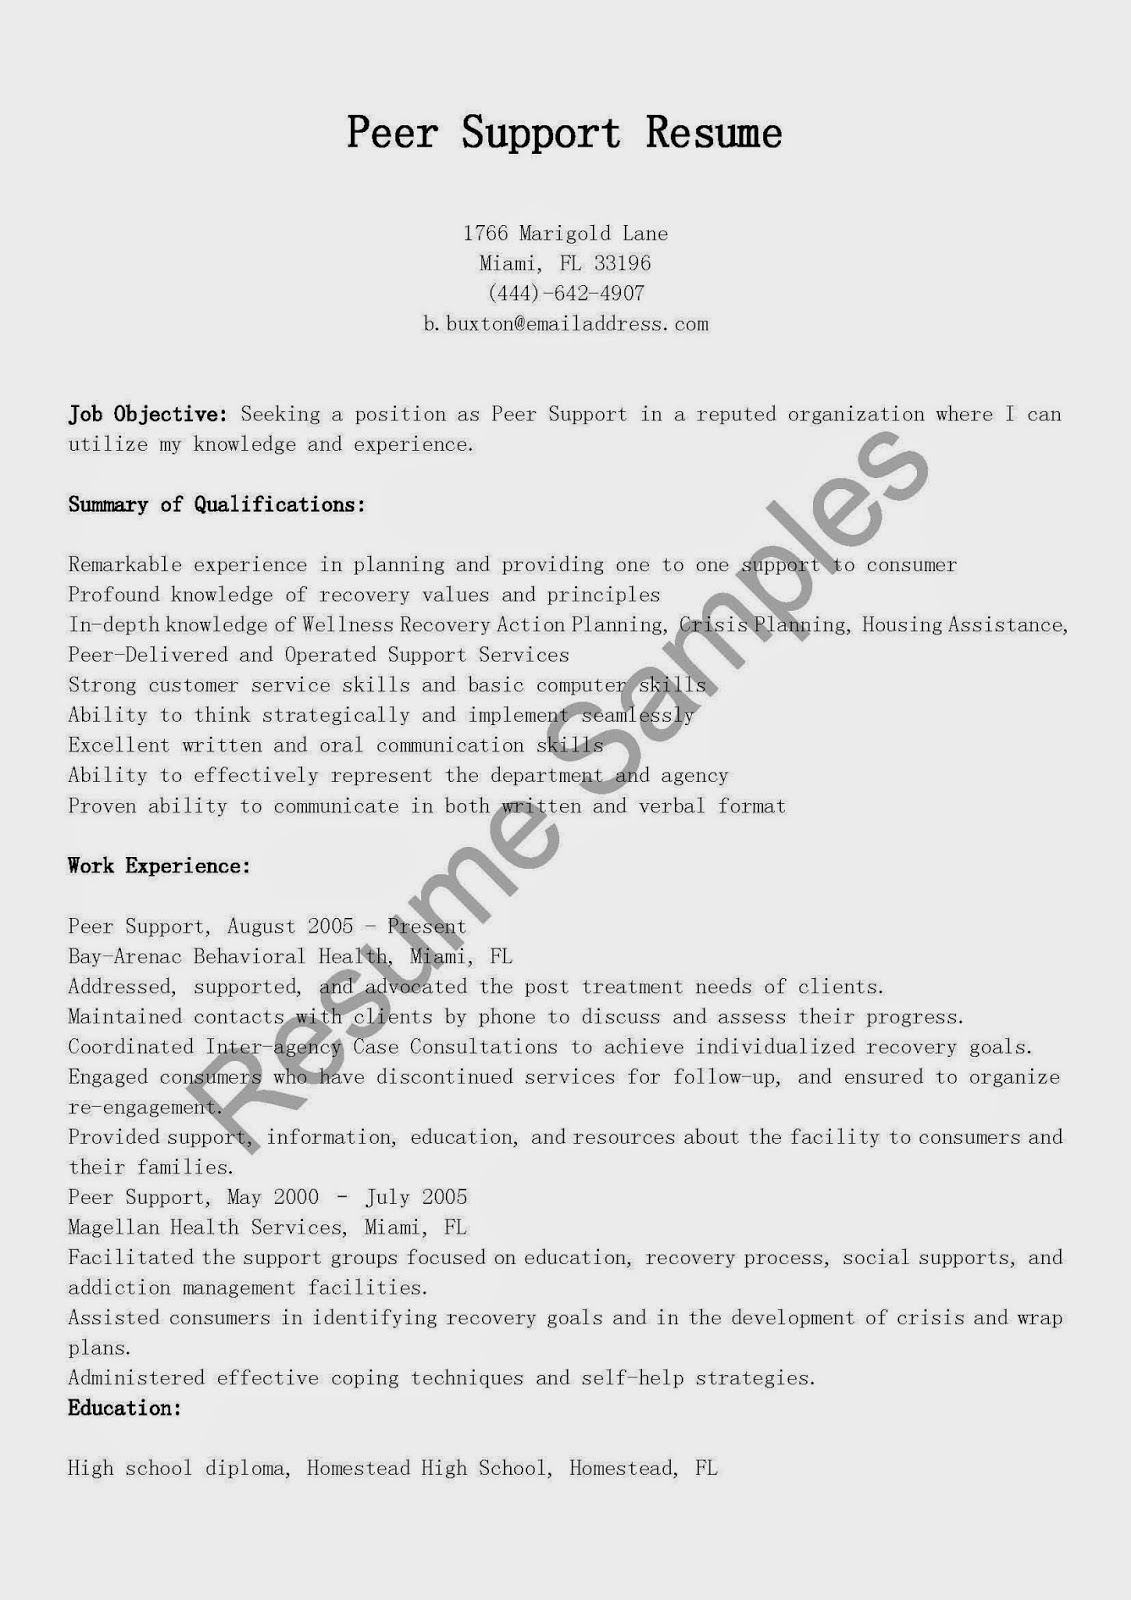 Boeing buyer resume